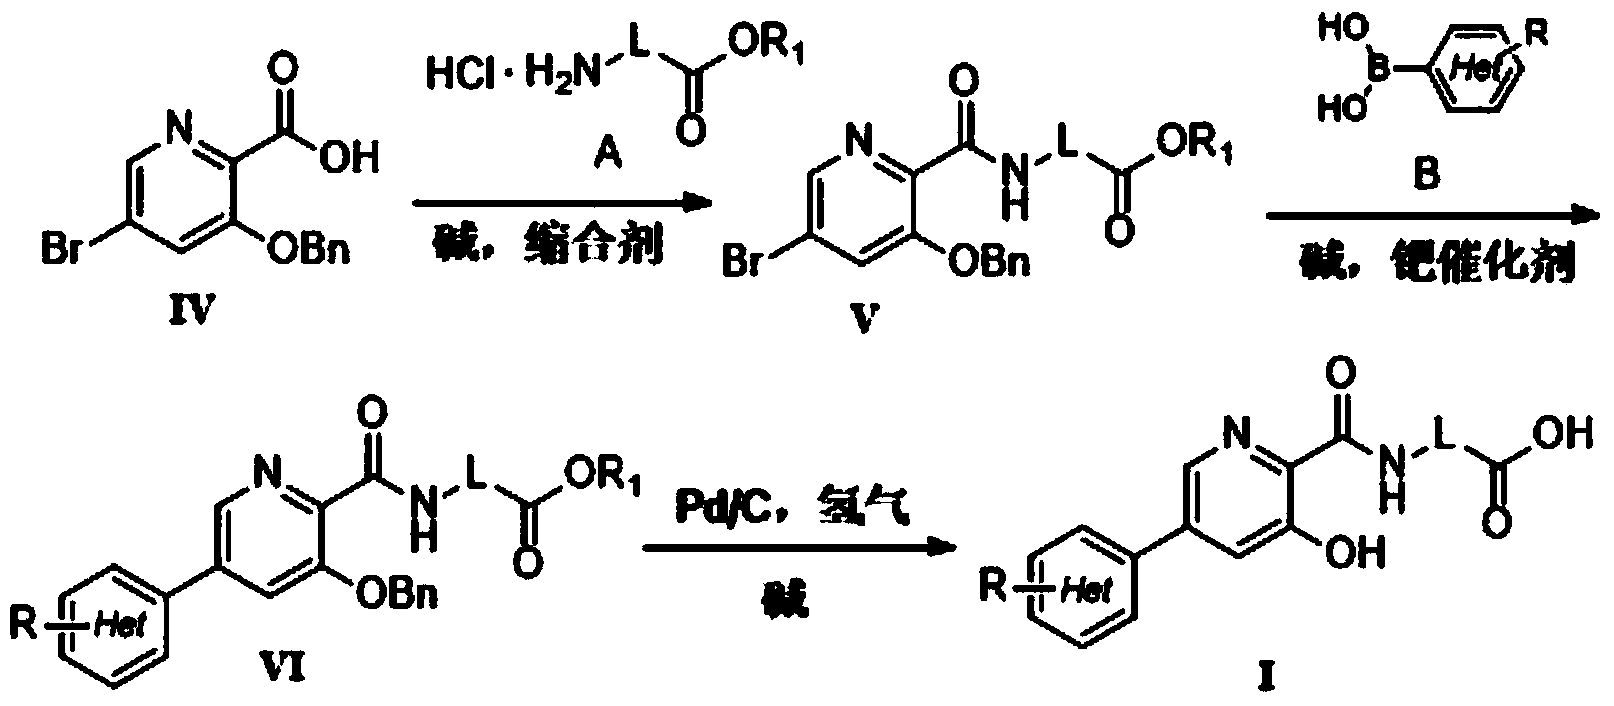 Preparation method and intermediate of 3-hydroxyl-5-aryl pyridine-2-formamide derivative